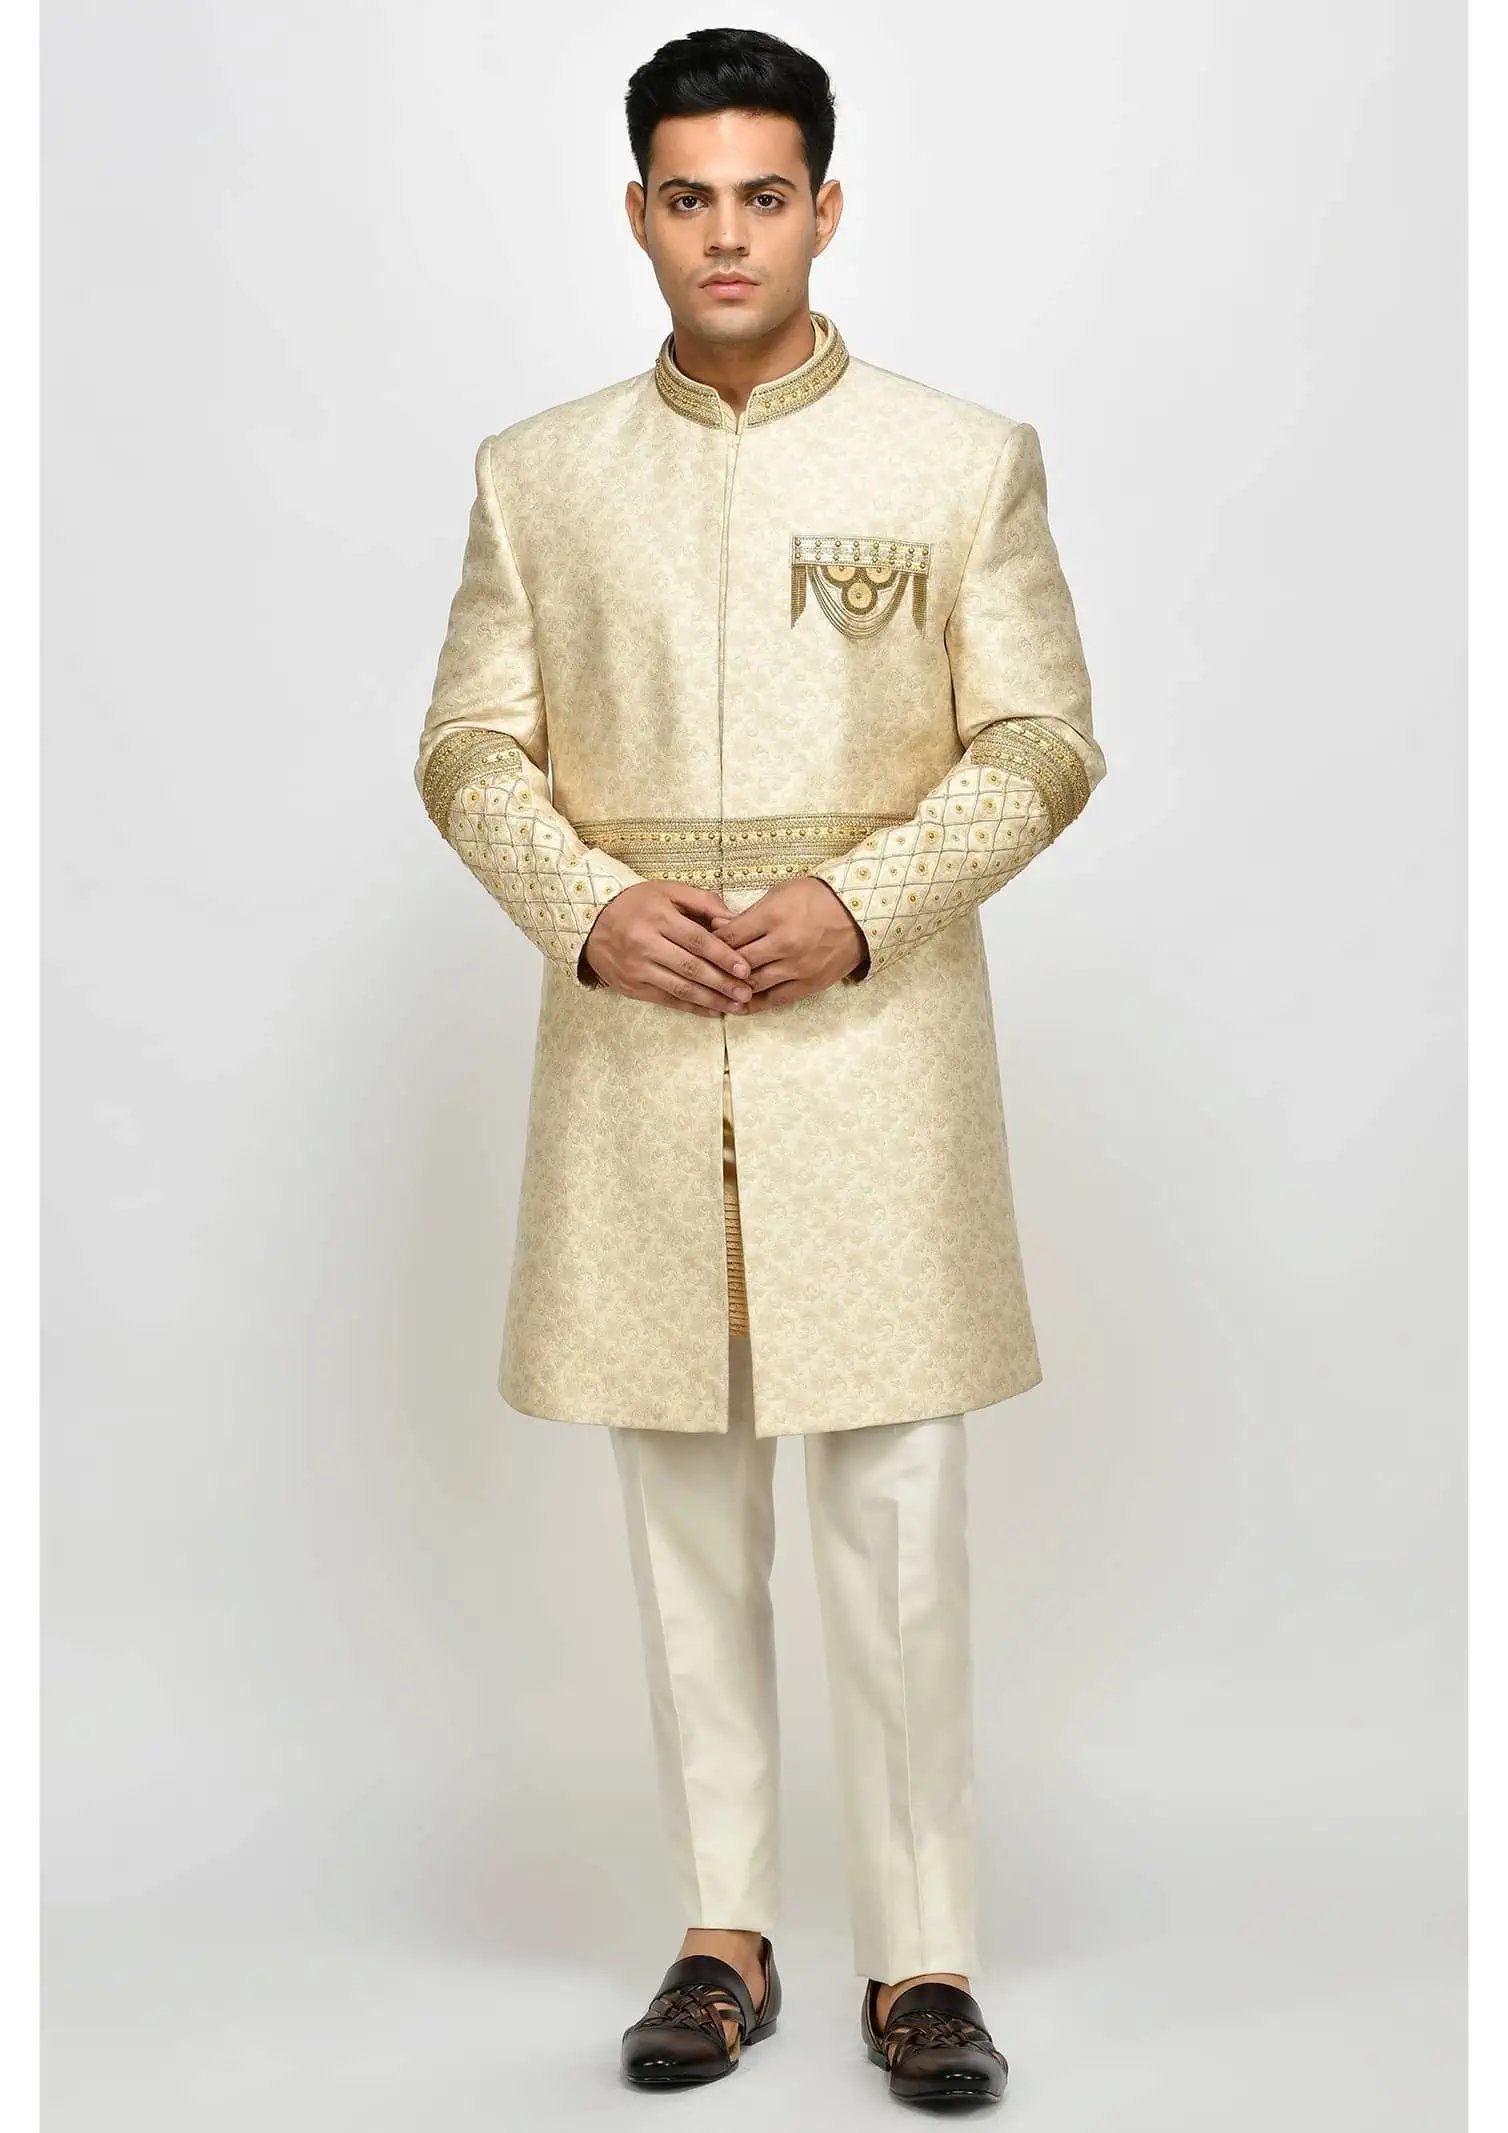 Off-white Short Sherwani Jacket - Indian Groom Outfit